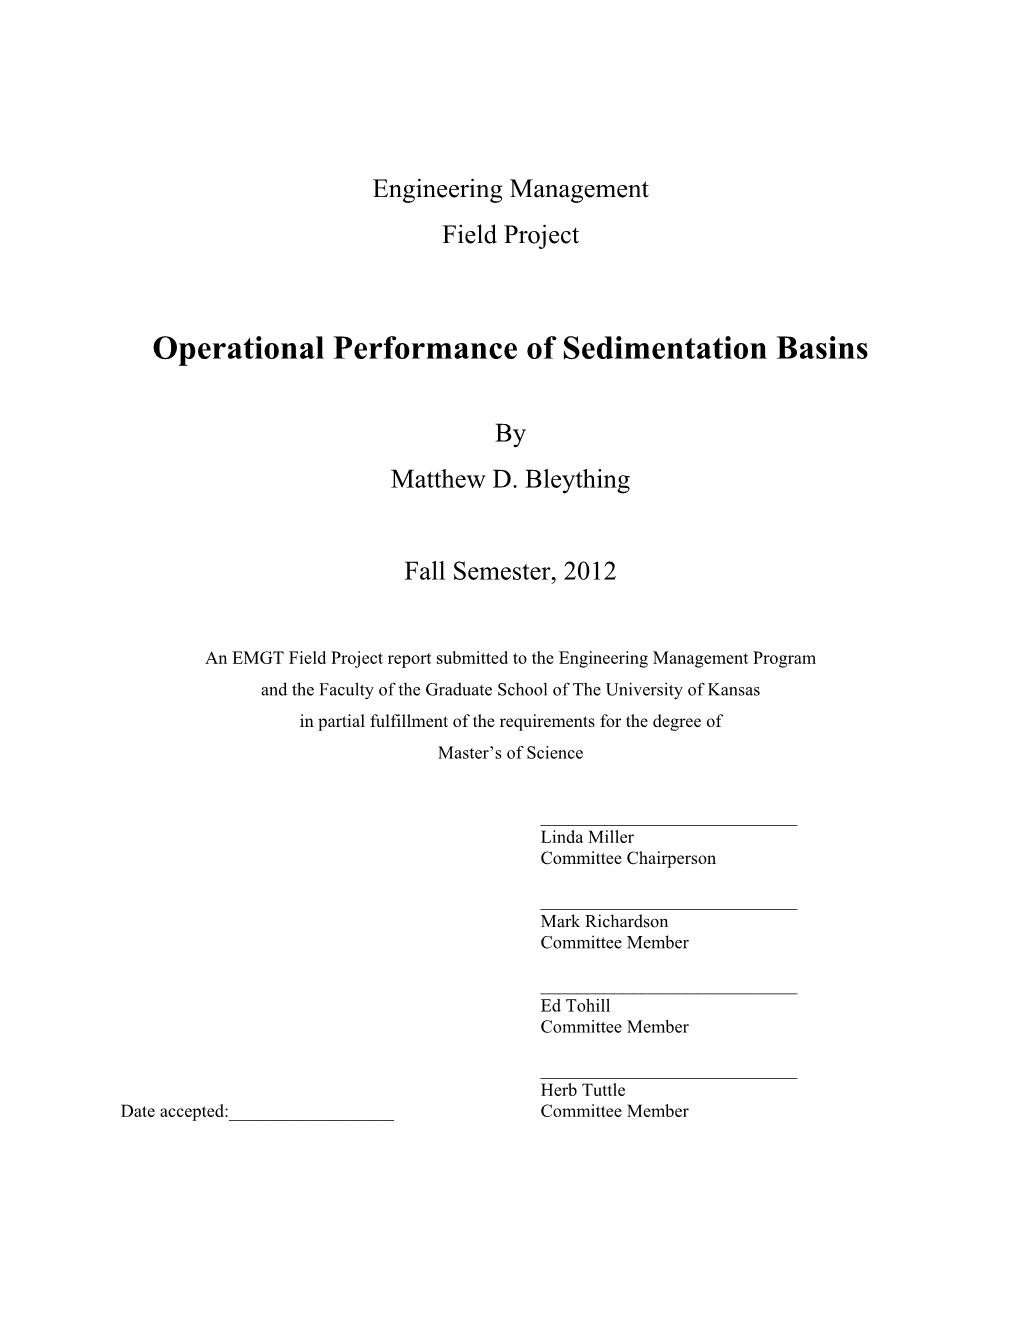 Operational Performance of Sedimentation Basins